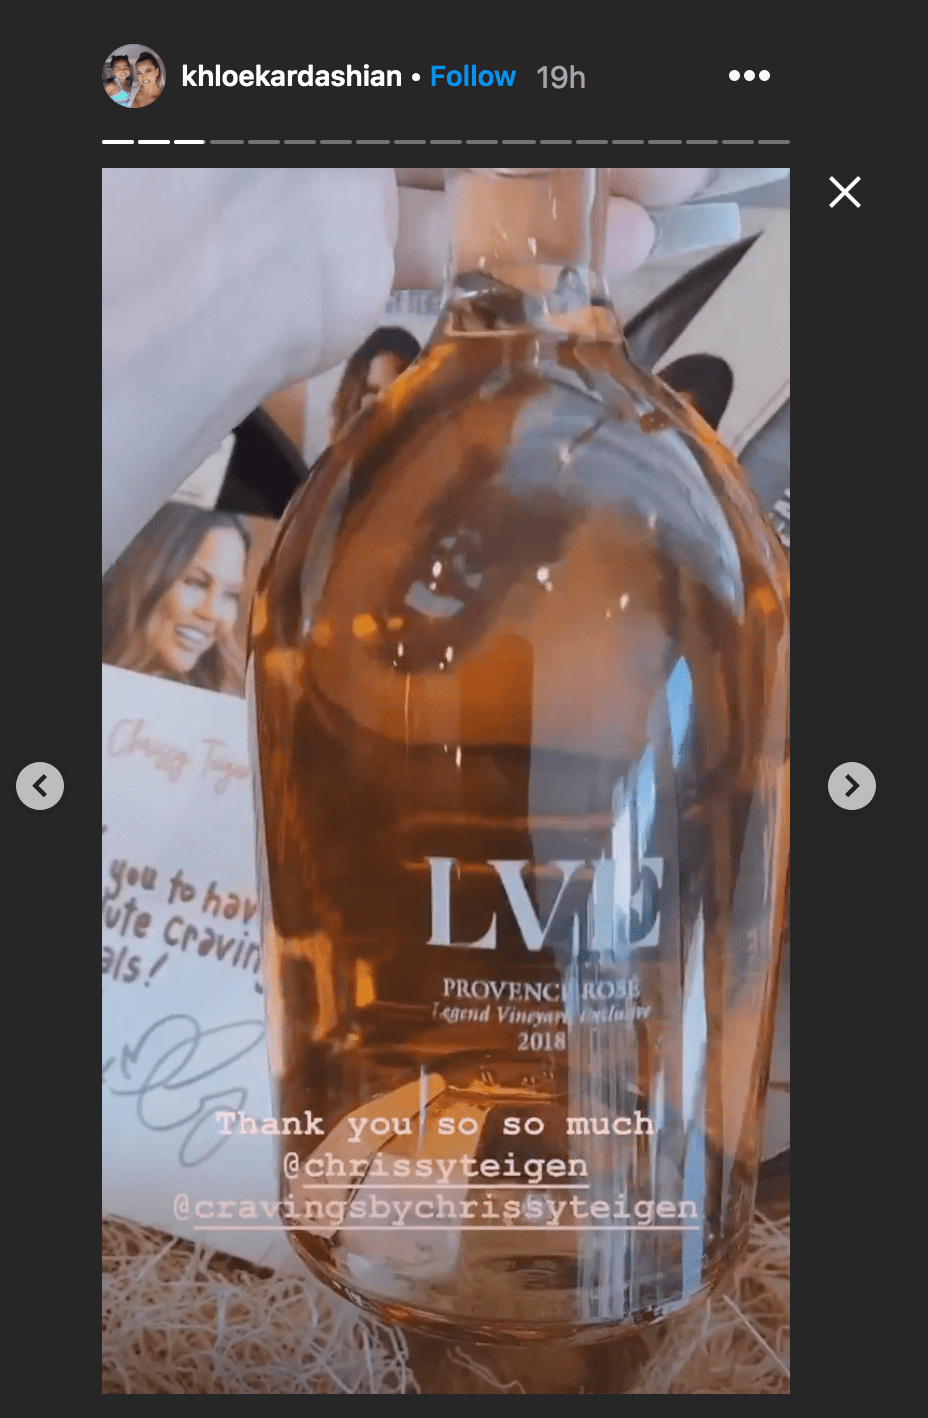 Khloe Kardashian shared a video of her displaying John Legend's LVE Provence Rose wine she received from Chrissy Teigen | Source: Instagram.com/khloekardashian